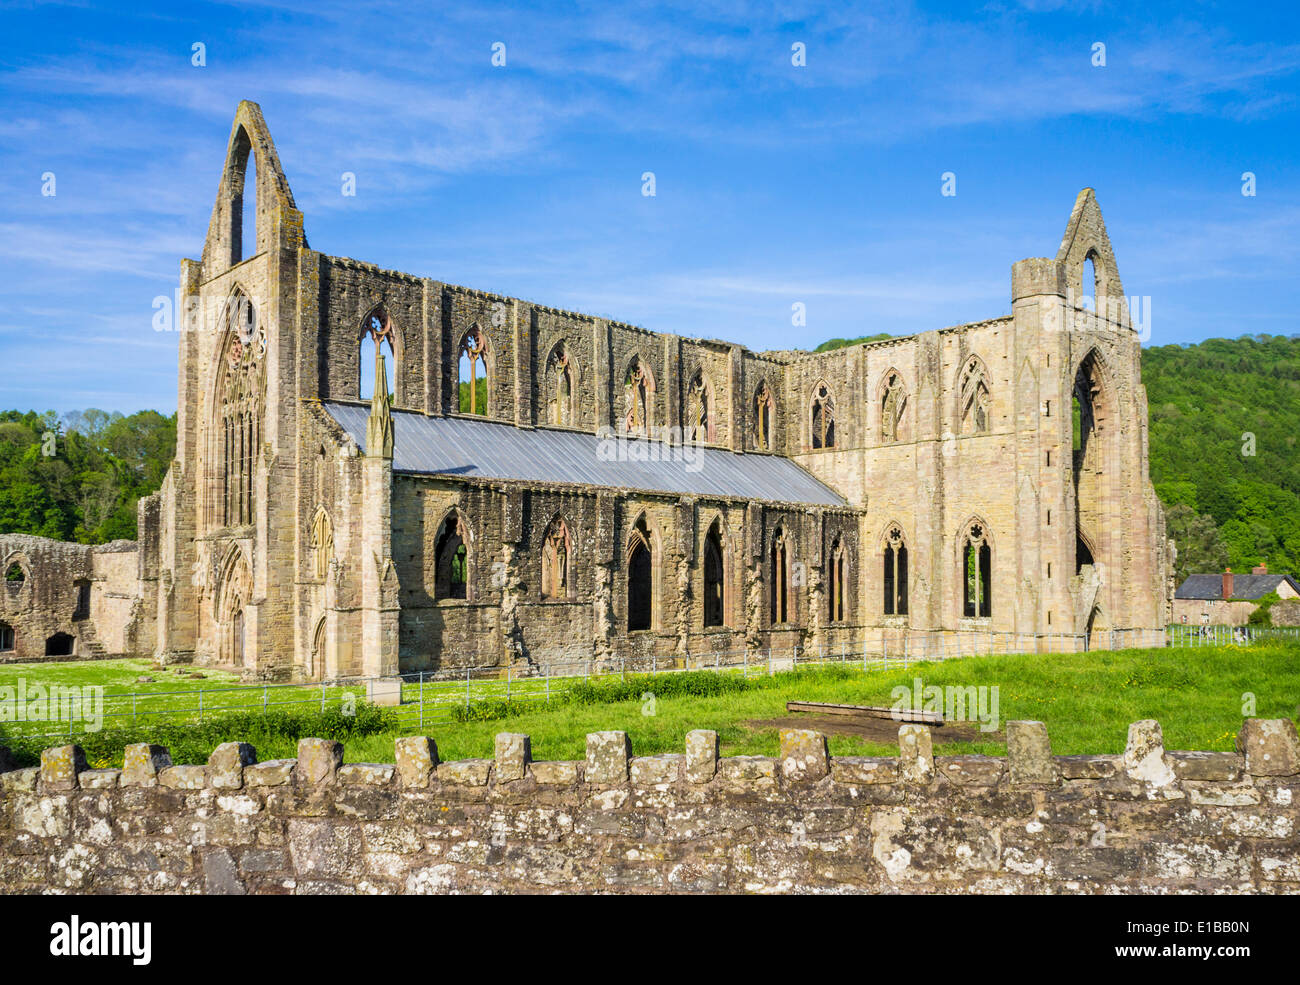 Abbaye de Tintern, Tintern, Wye Valley, Monbucshire, pays de Galles, Royaume-Uni, Europe Banque D'Images